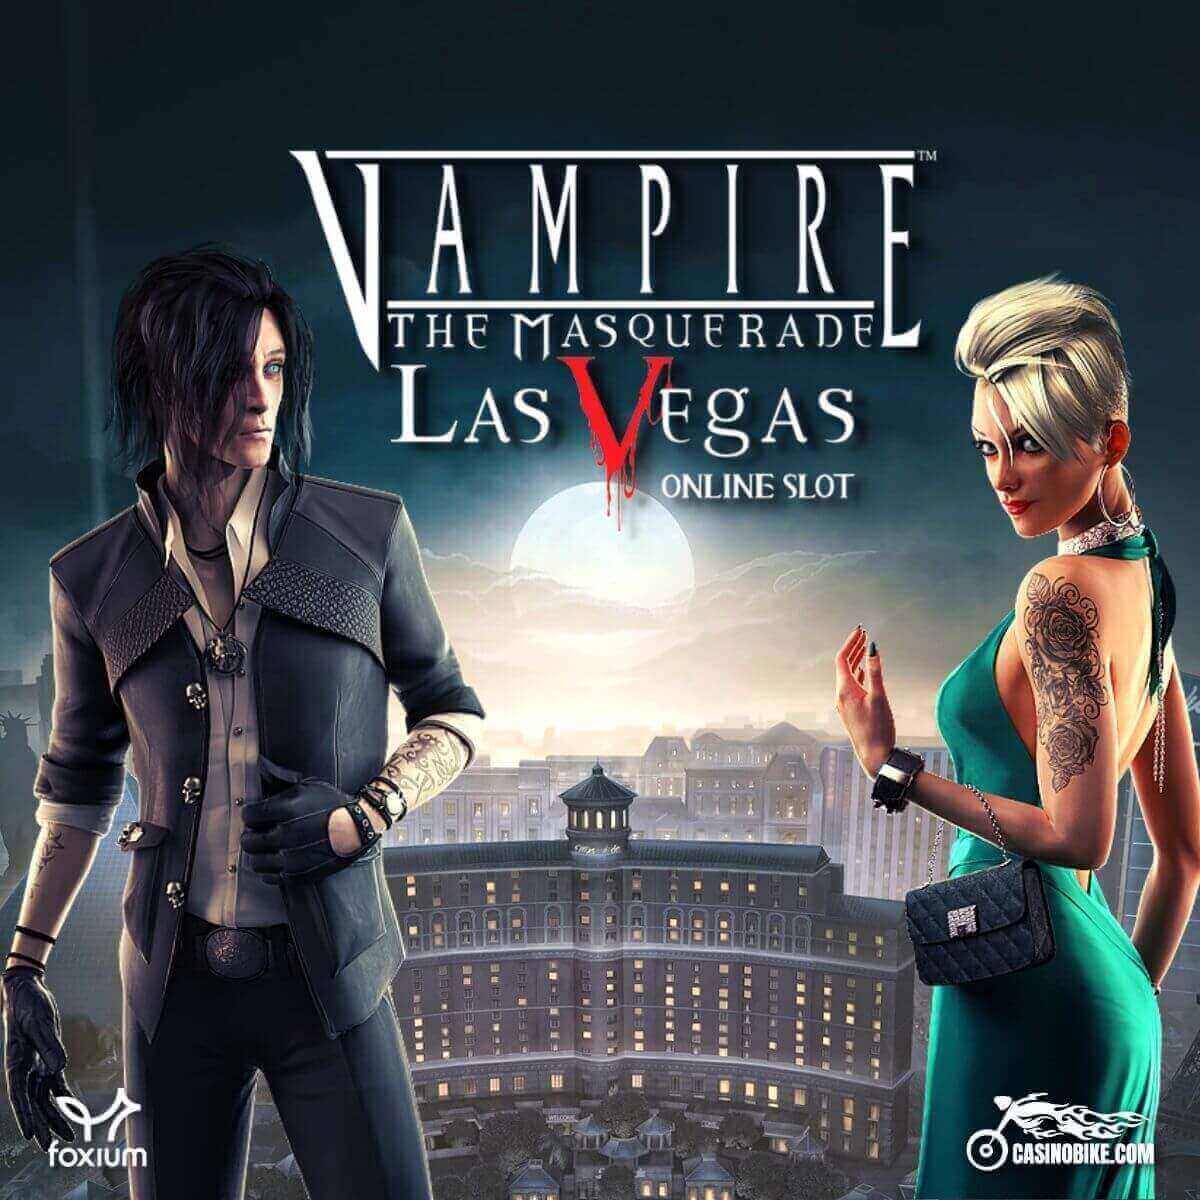 Vampire The Masquerade   Las Vegas Slot by Foxium Games